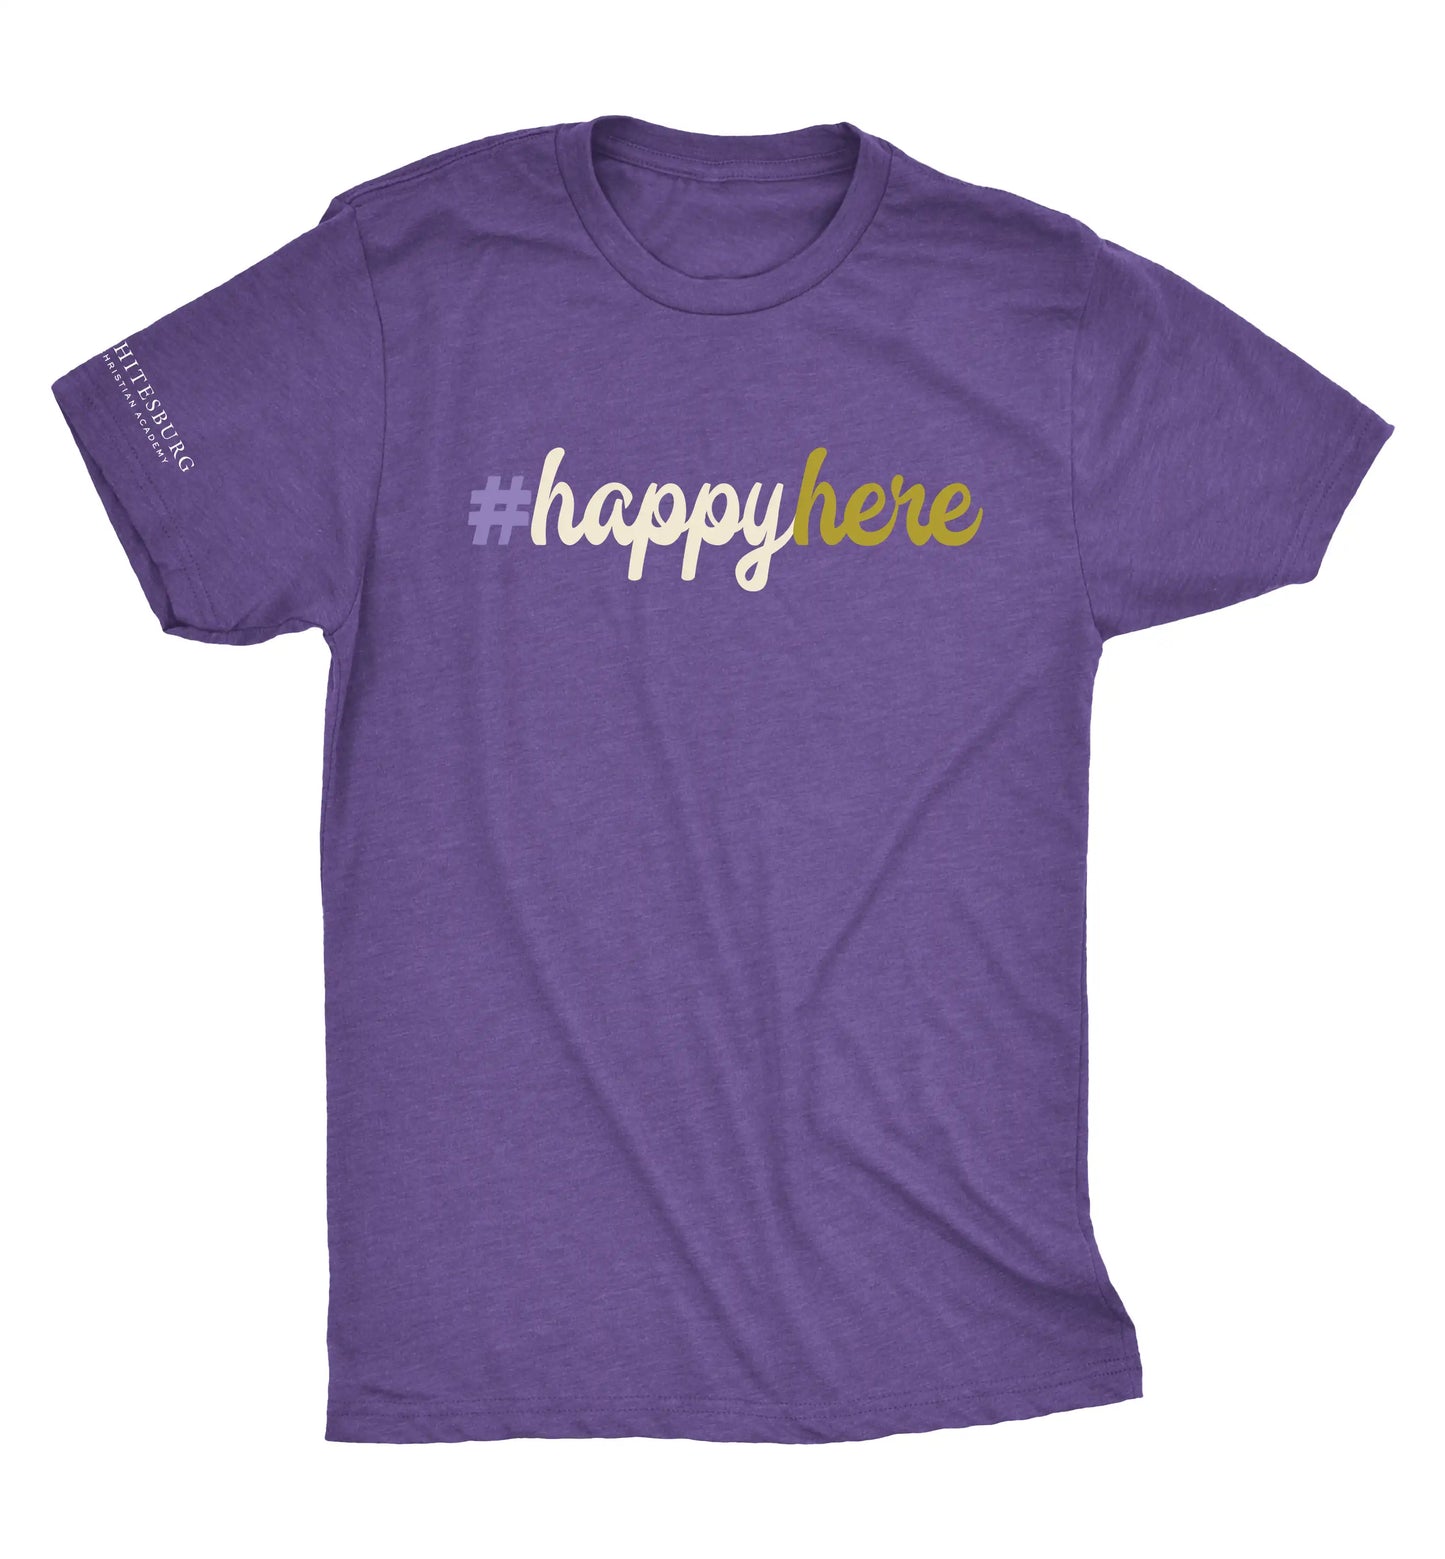 #HappyHere Tshirt